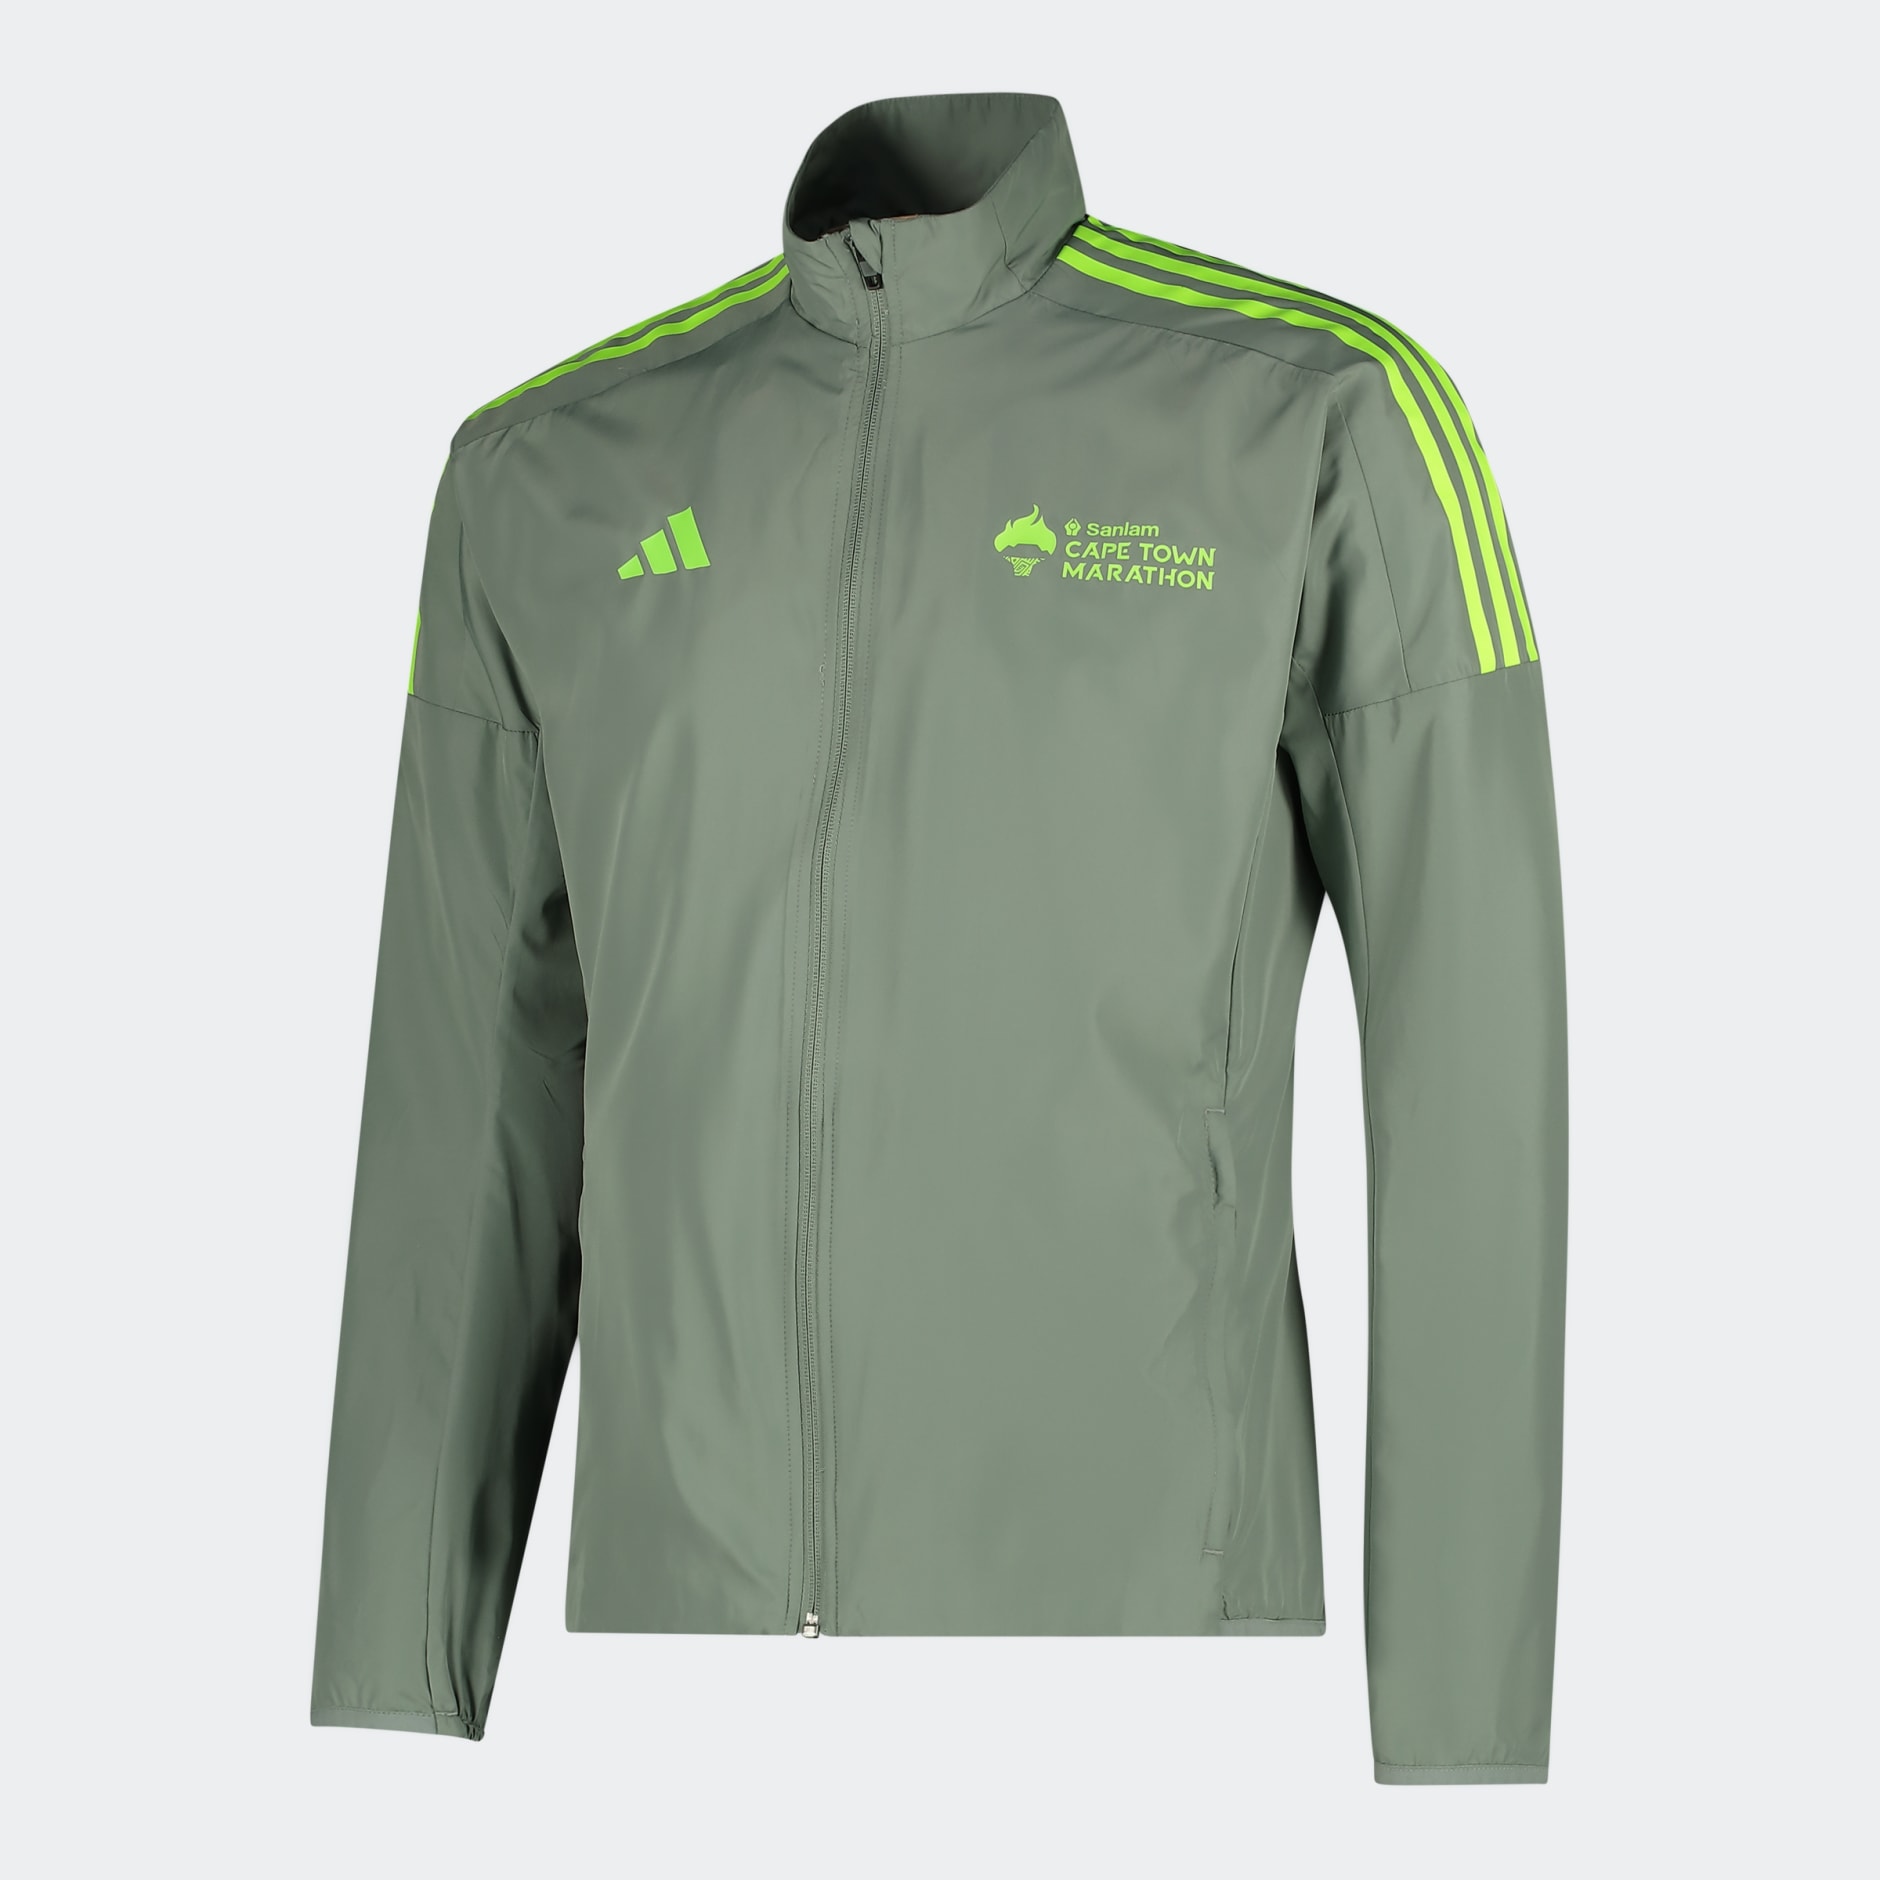 x Wales Bonner track jacket in green - Adidas | Mytheresa